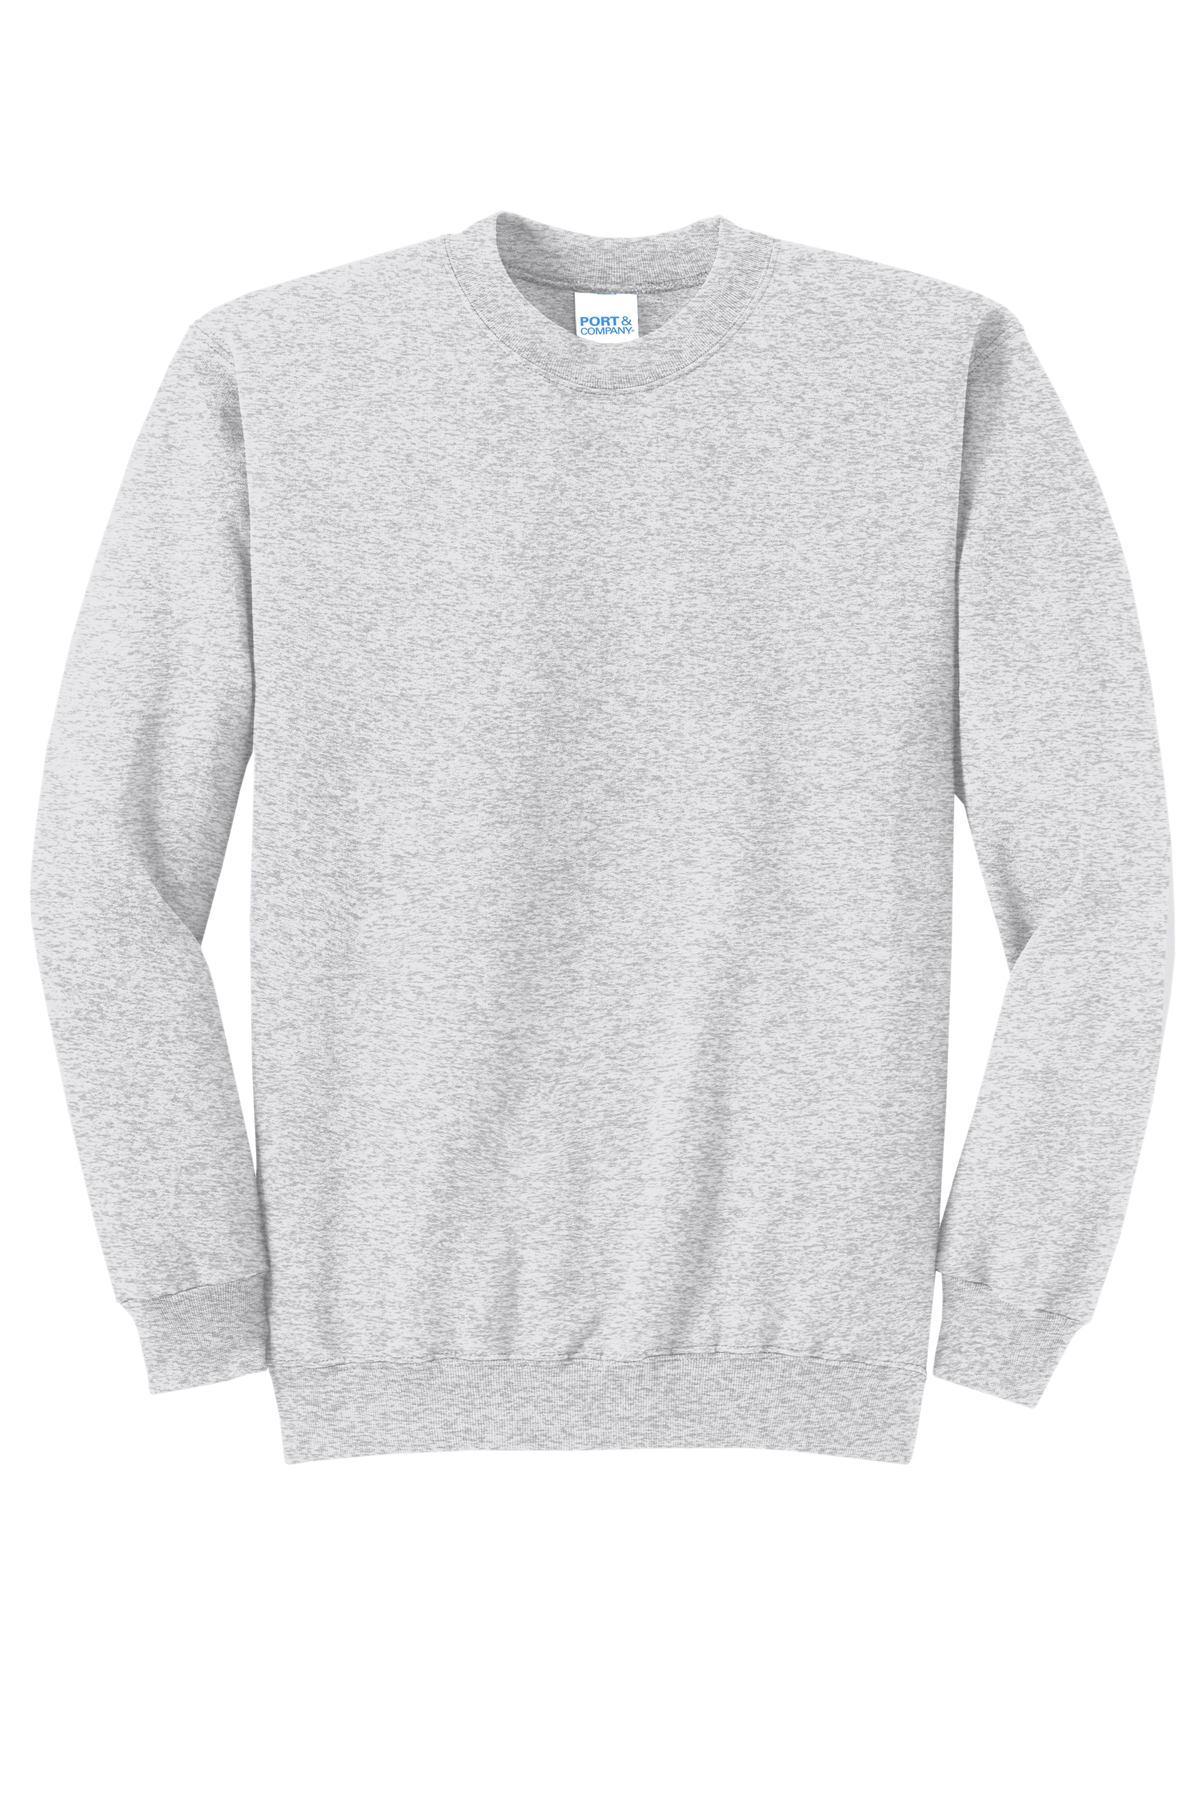 700fill Ash Grey Crewneck Sweatshirt